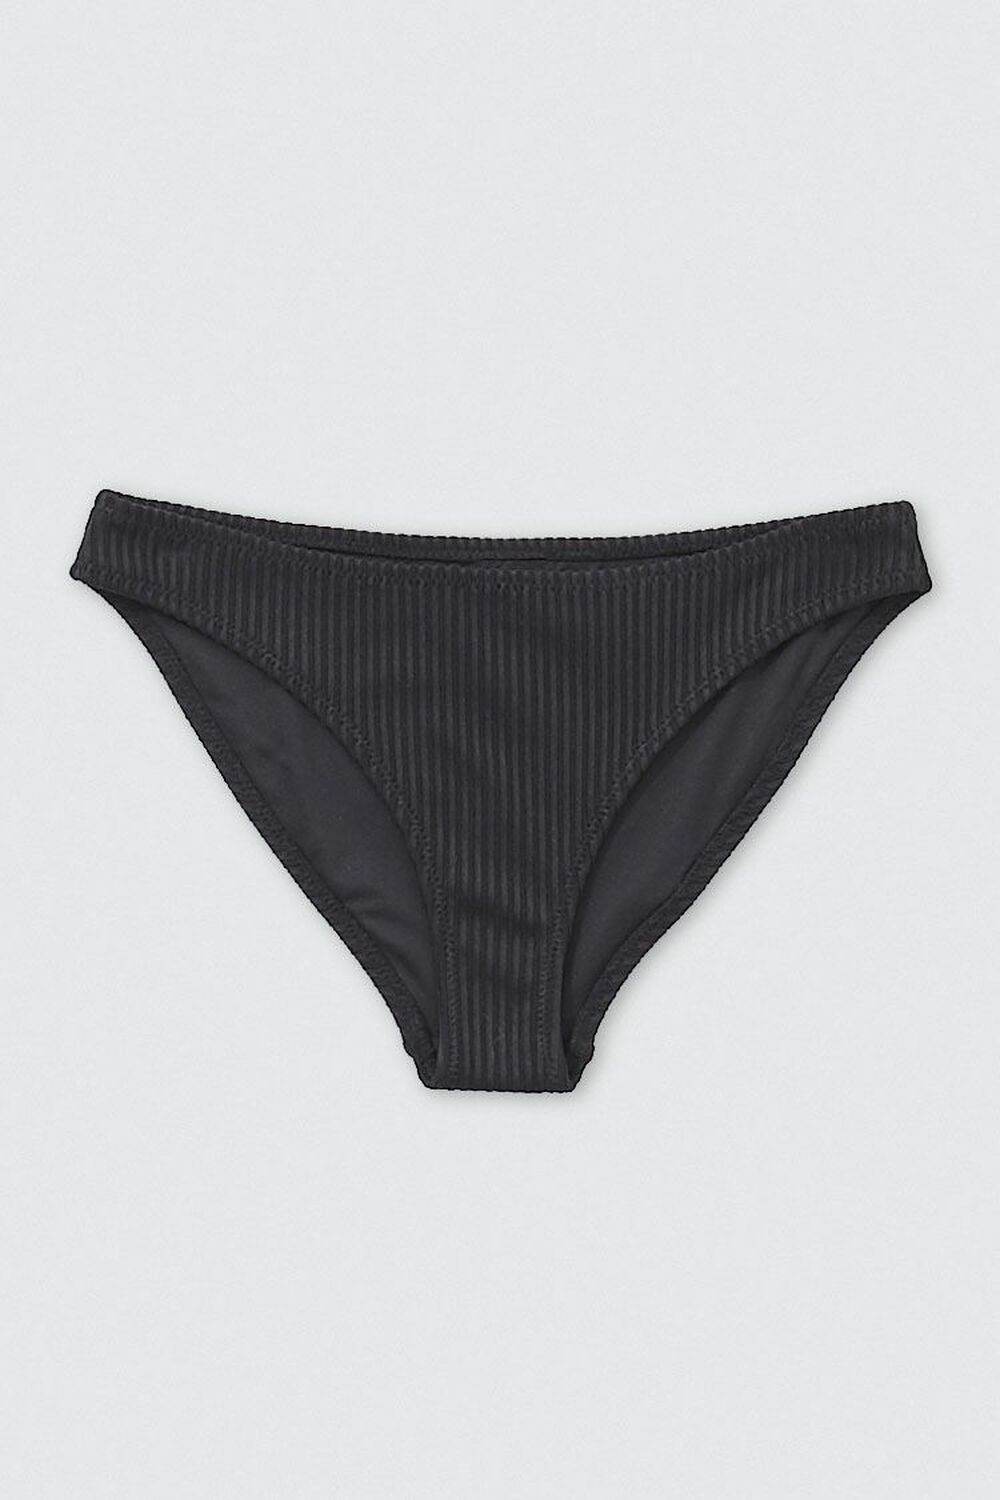 BLACK Ribbed Knit Bikini Bottoms, image 1